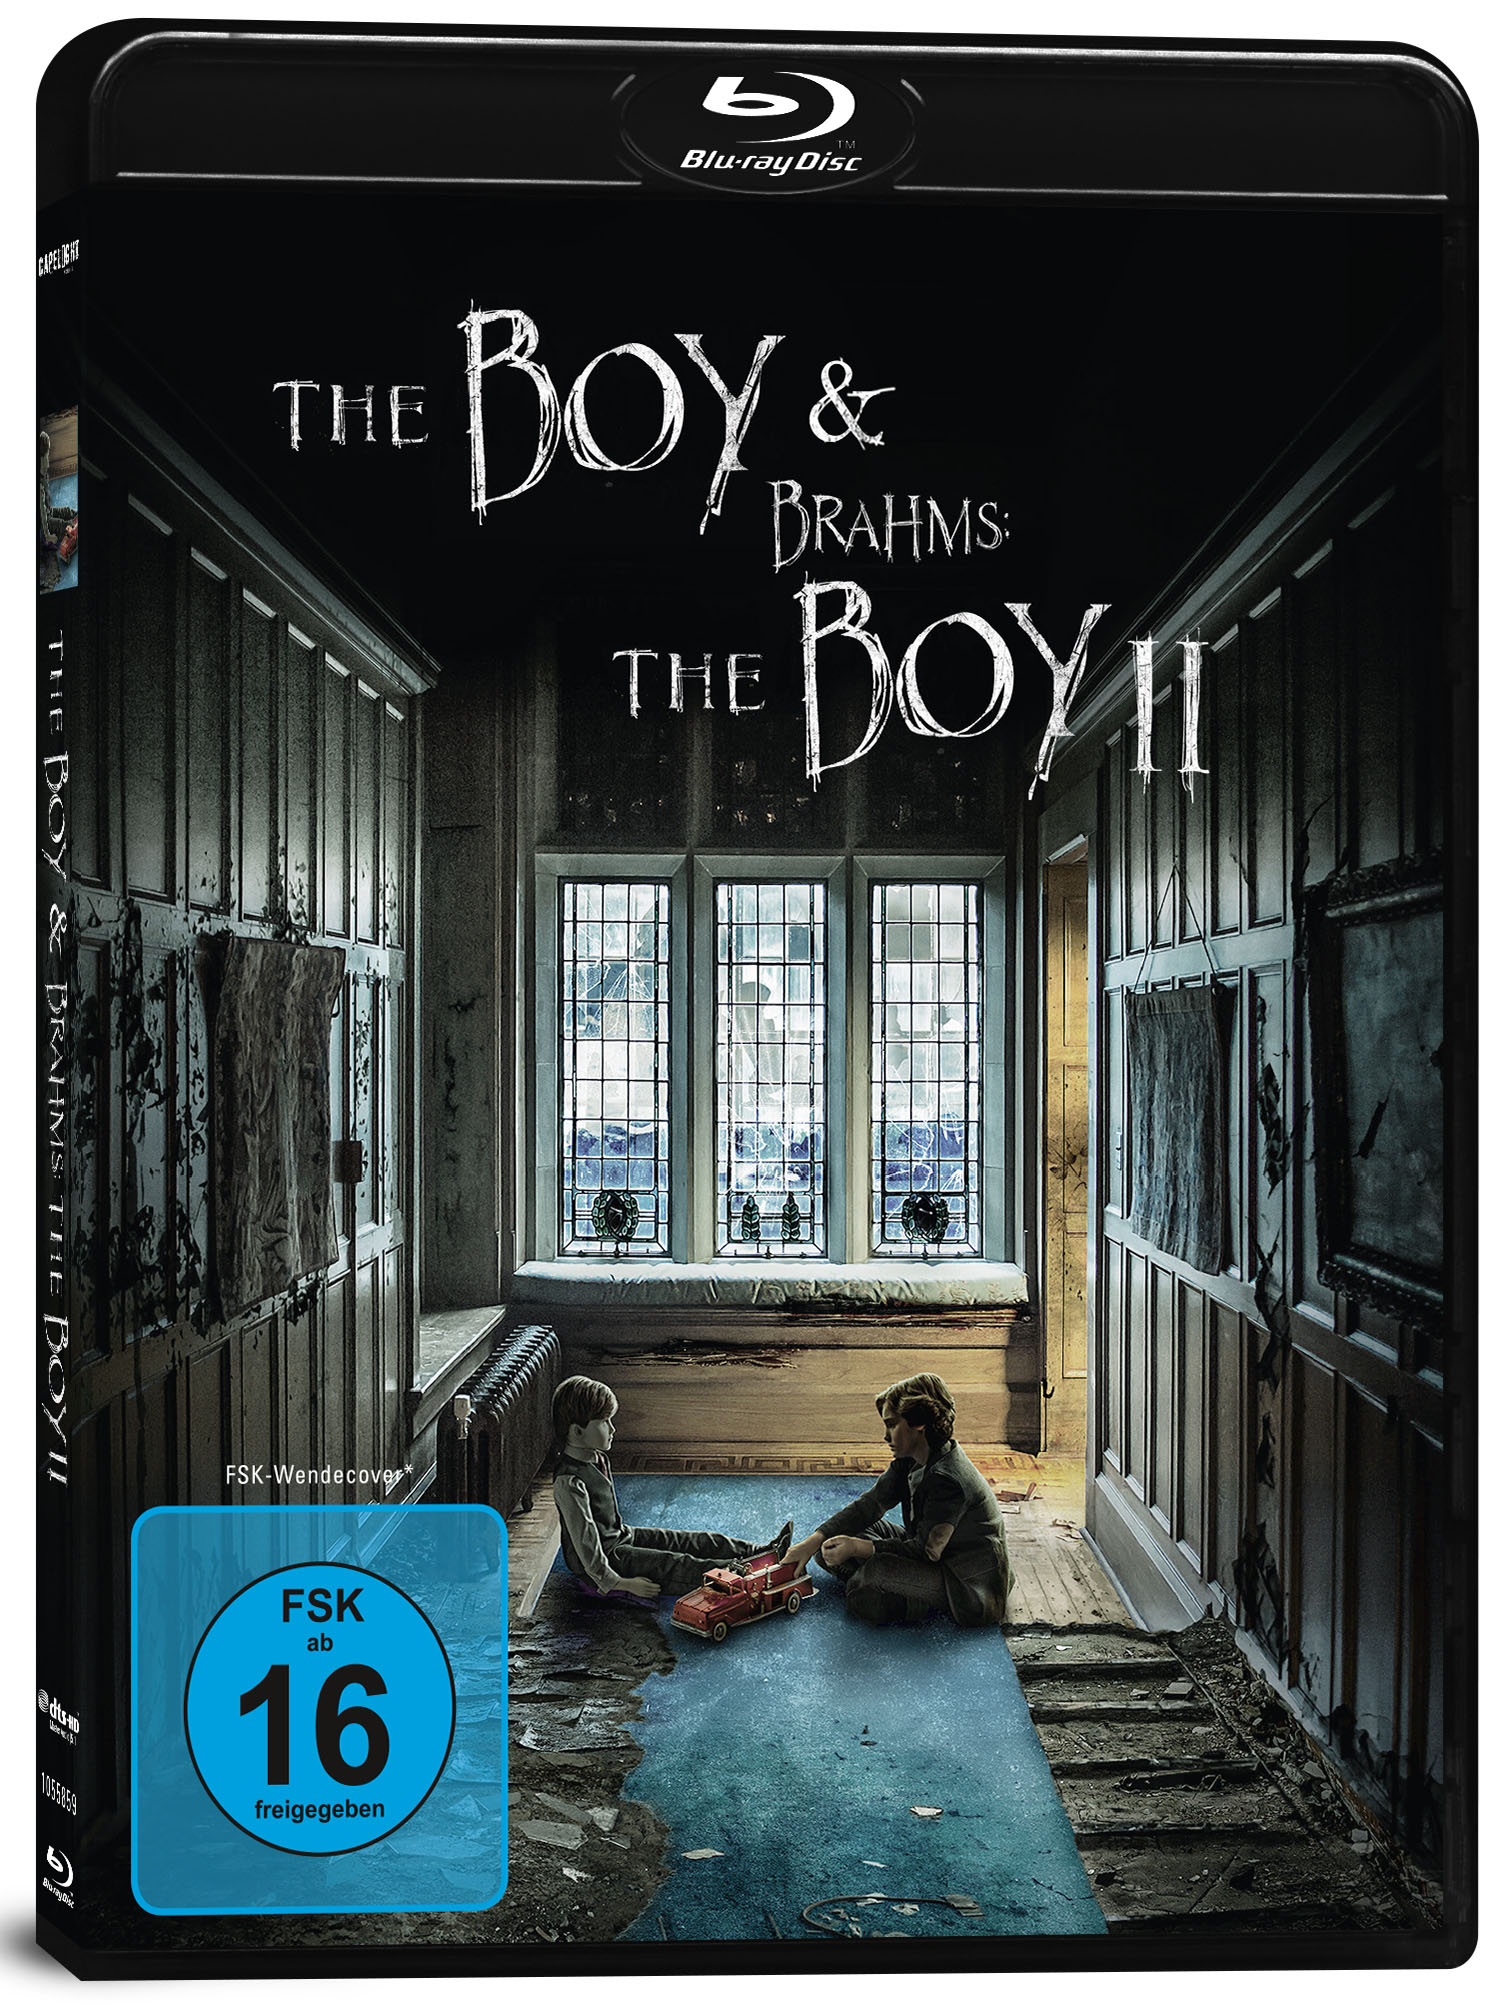 The Boy I + II (Blu-ray) Image 2